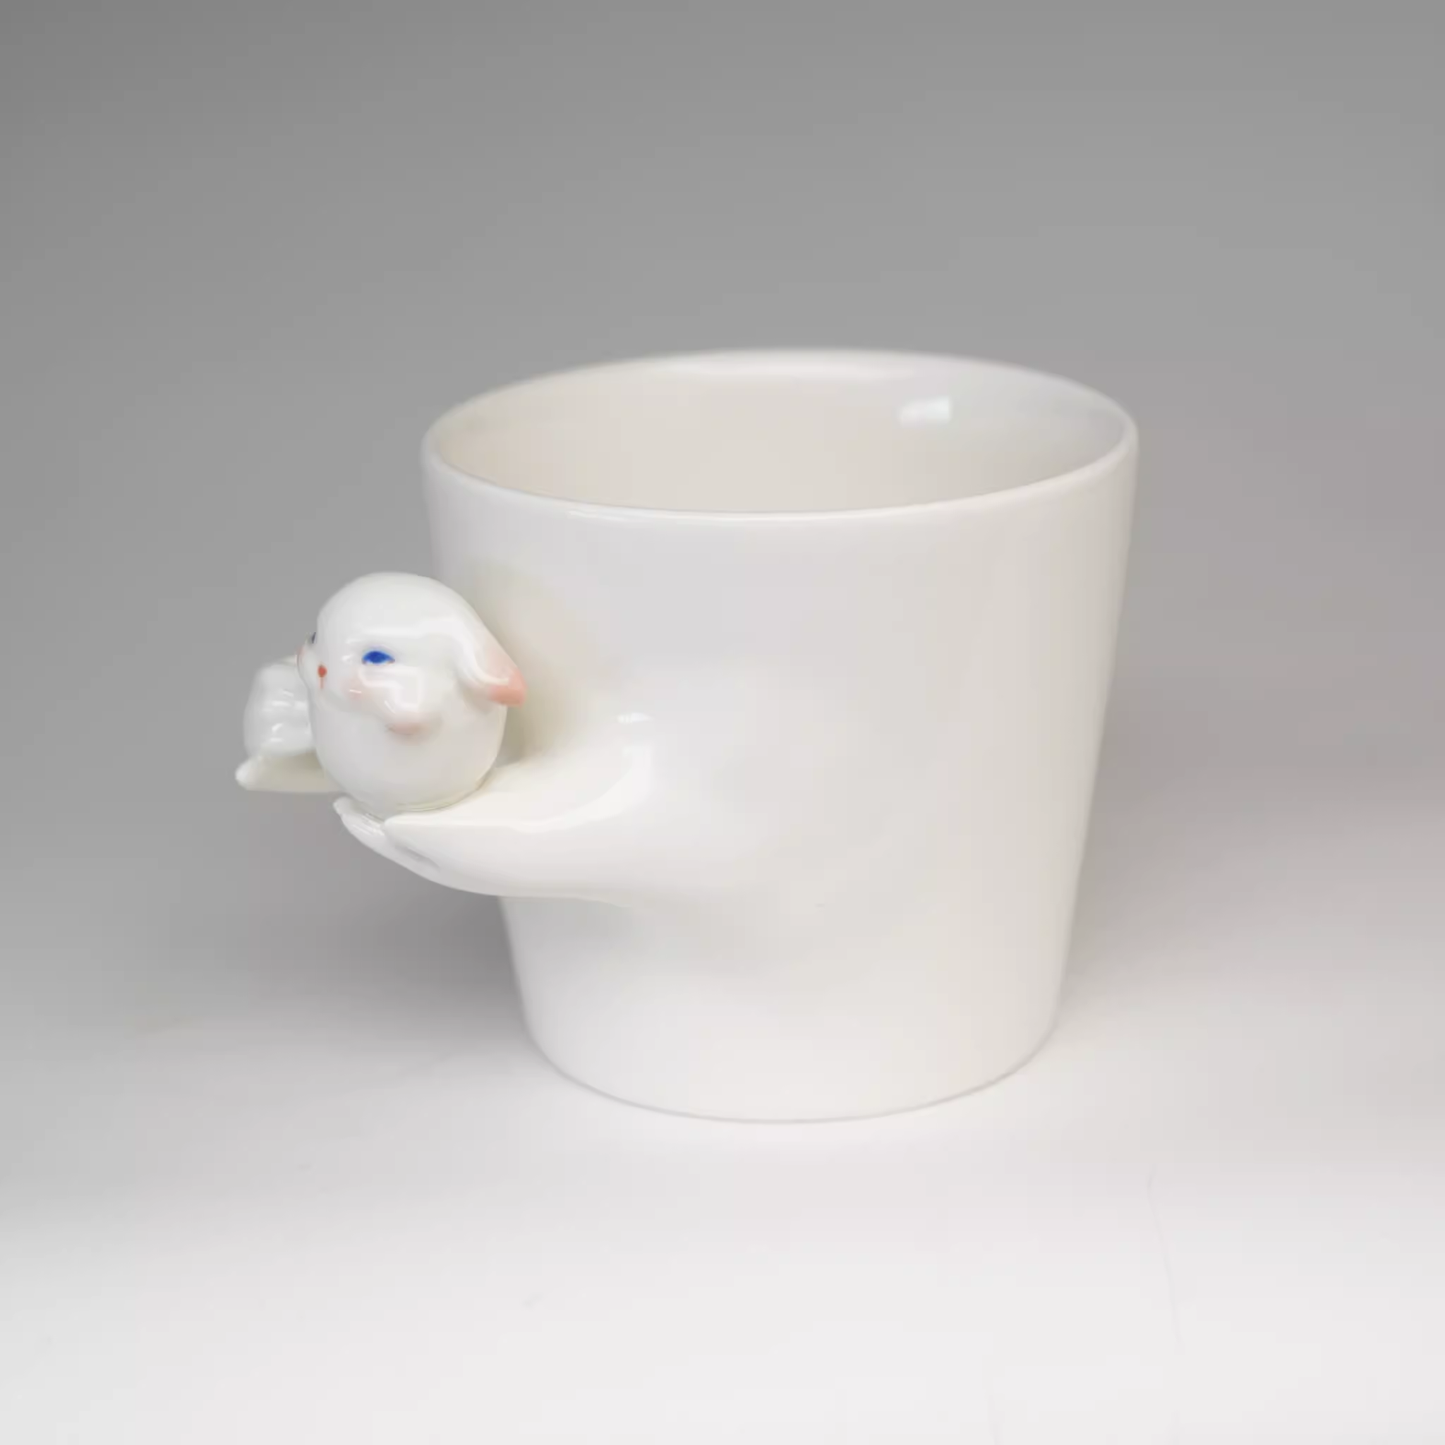 Cute Mug With a Tiny Rabbit